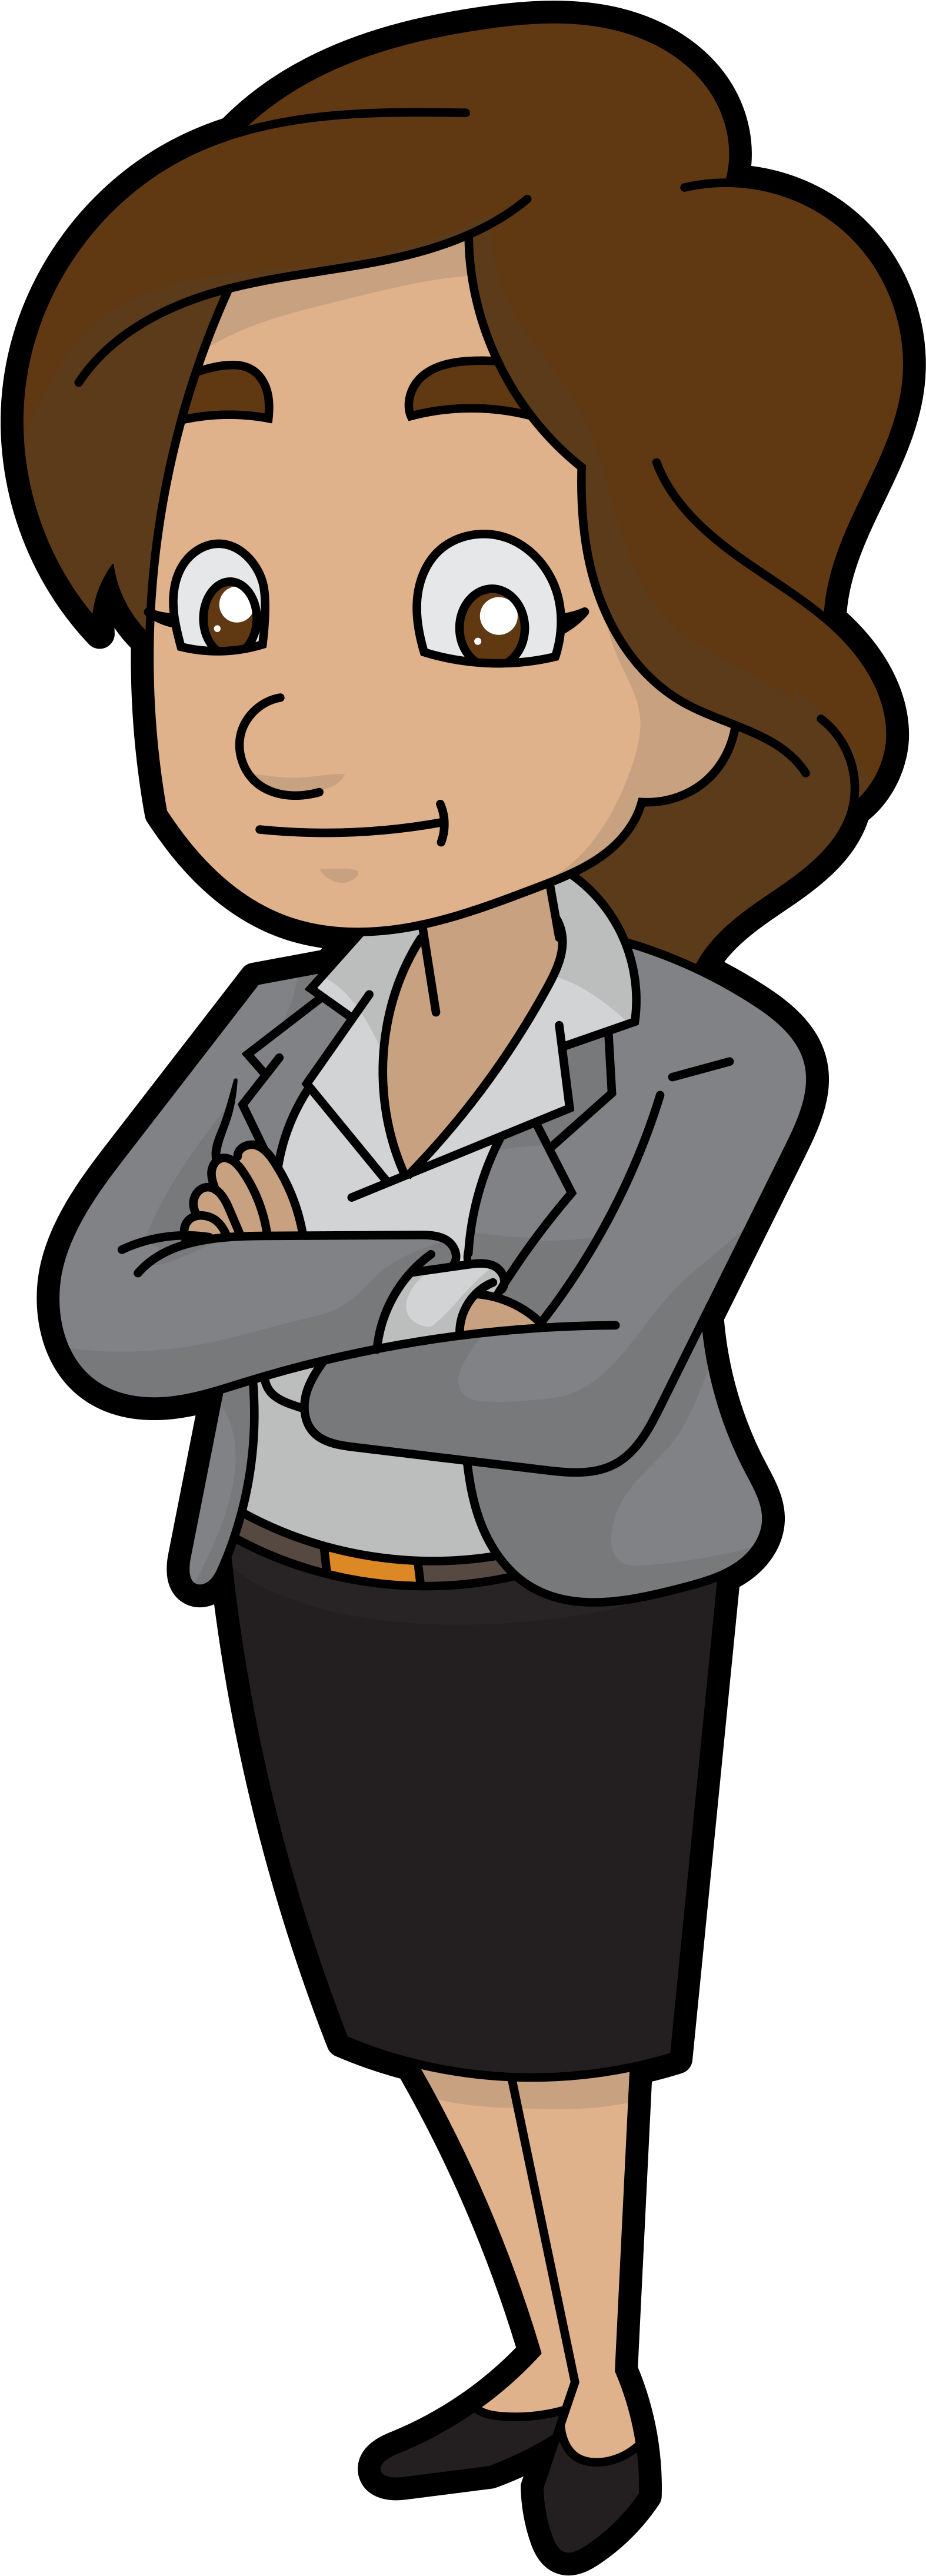 Confident Cartoon Businesswoman.png